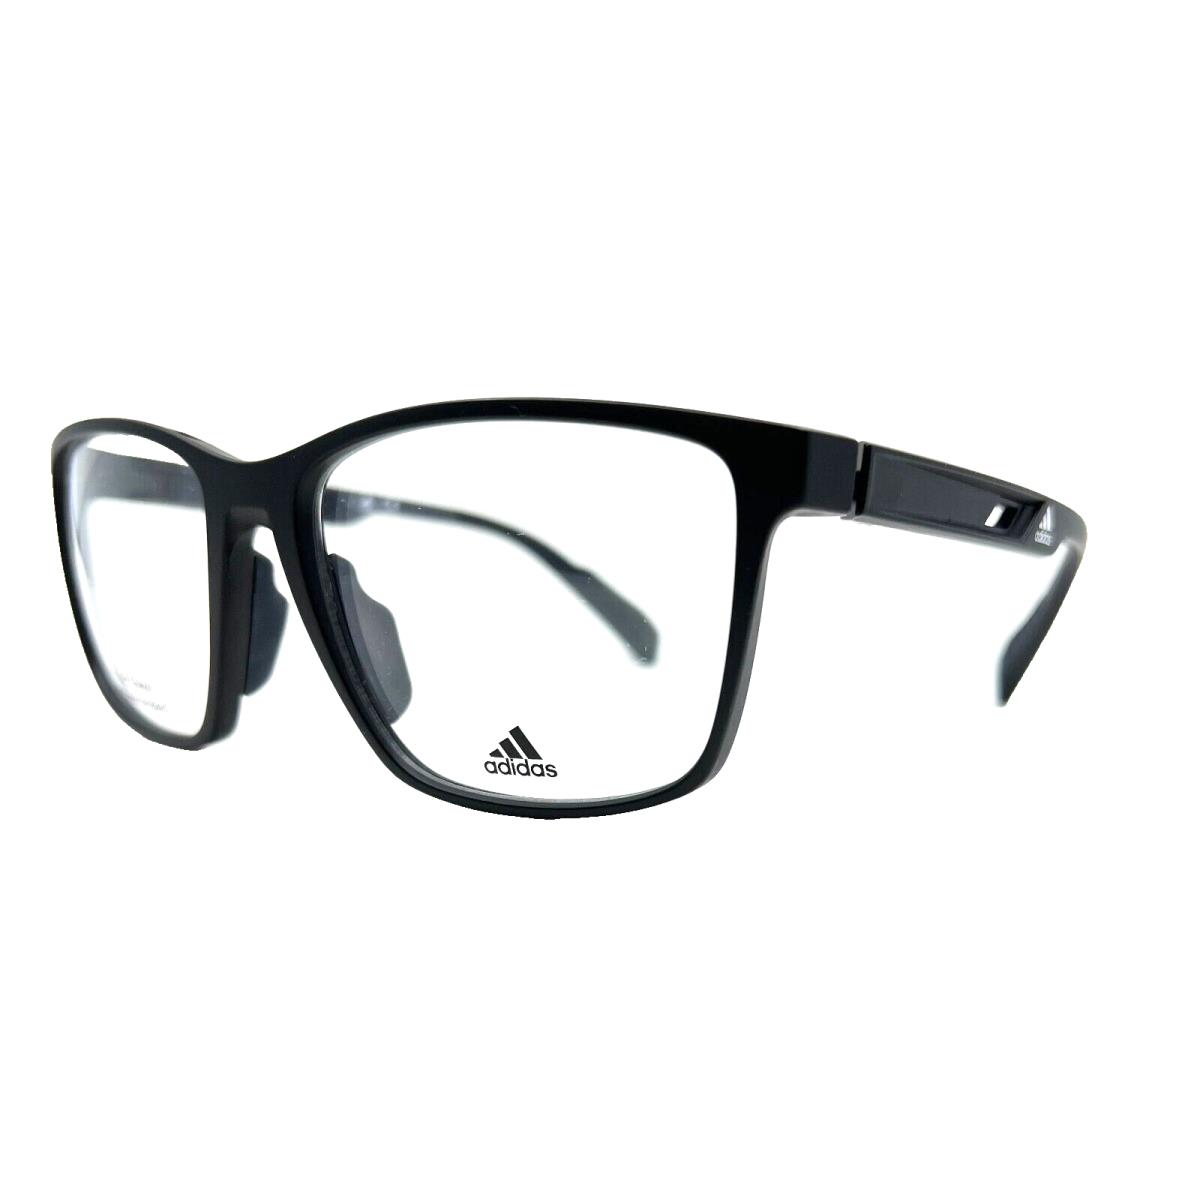 Adidas Sport SP5008 002 56/17/140 - Black - Eyeglasses Case - Frame: Black, Front Frame: Matte Black, Temple: Matte Black w/ Silver Adidas Logo